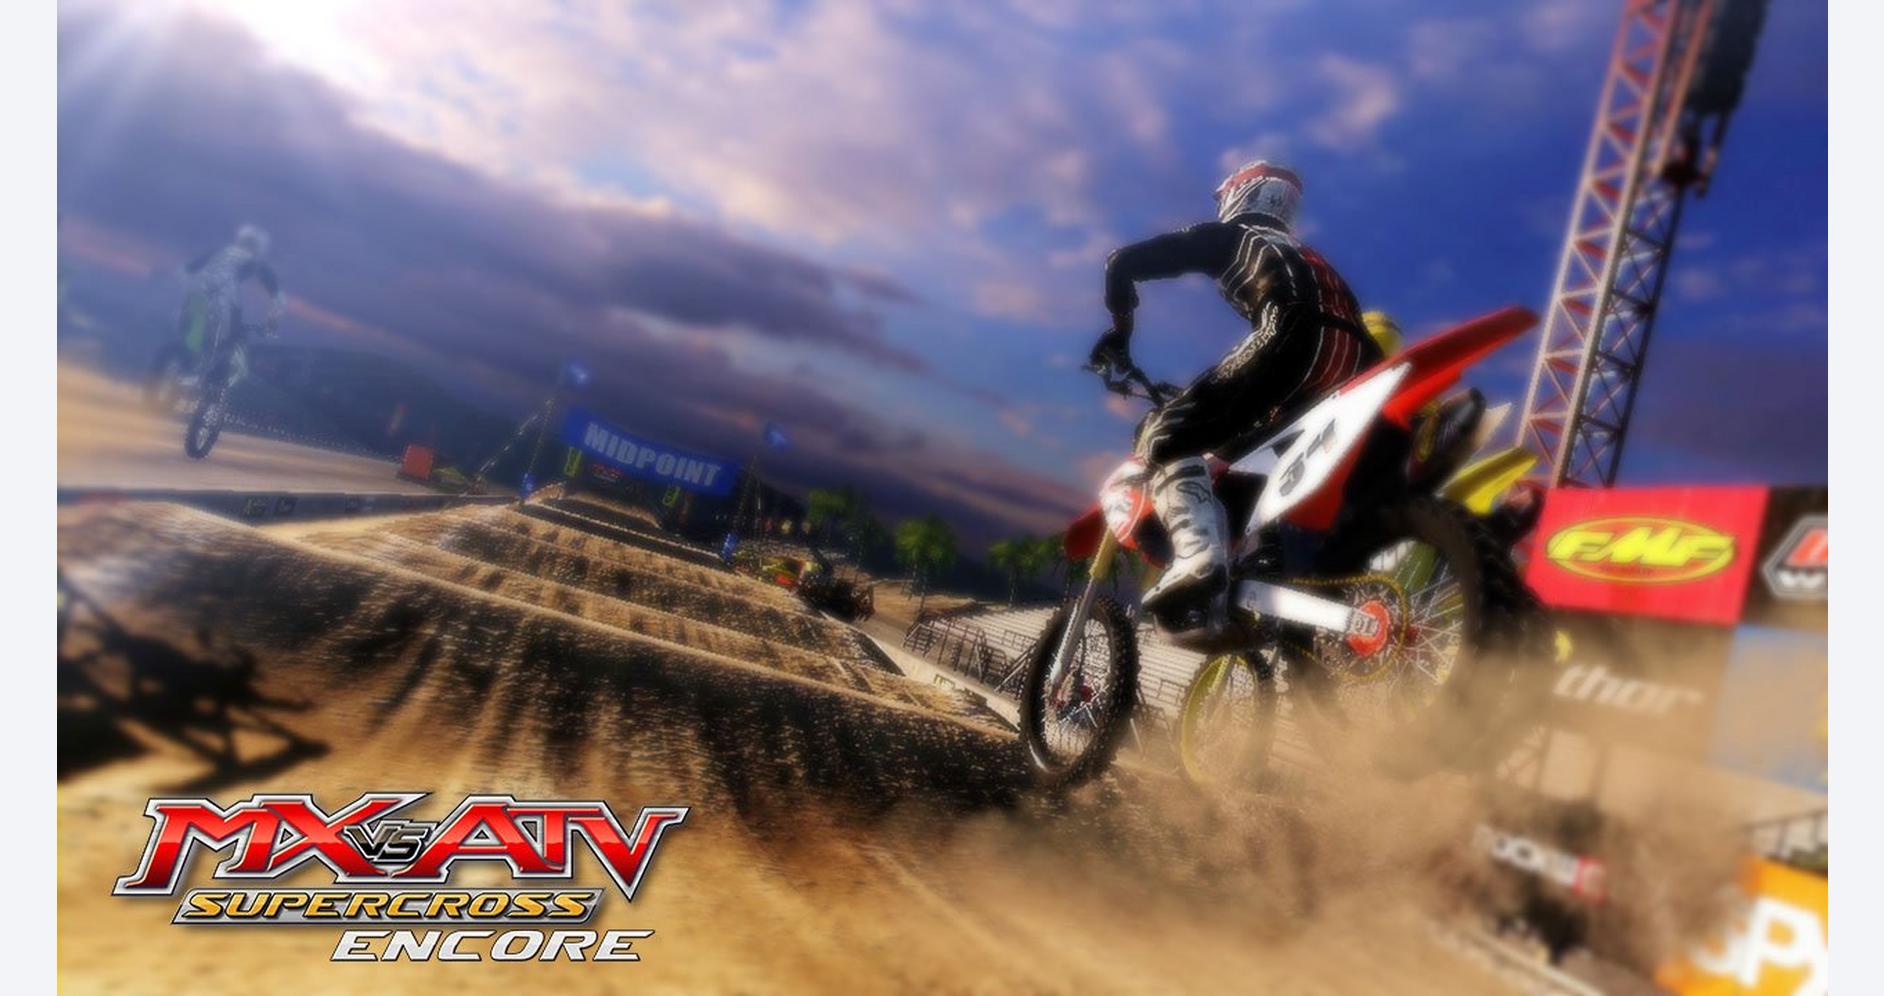 Jogo MX vs ATV Supercross Encore para PS4